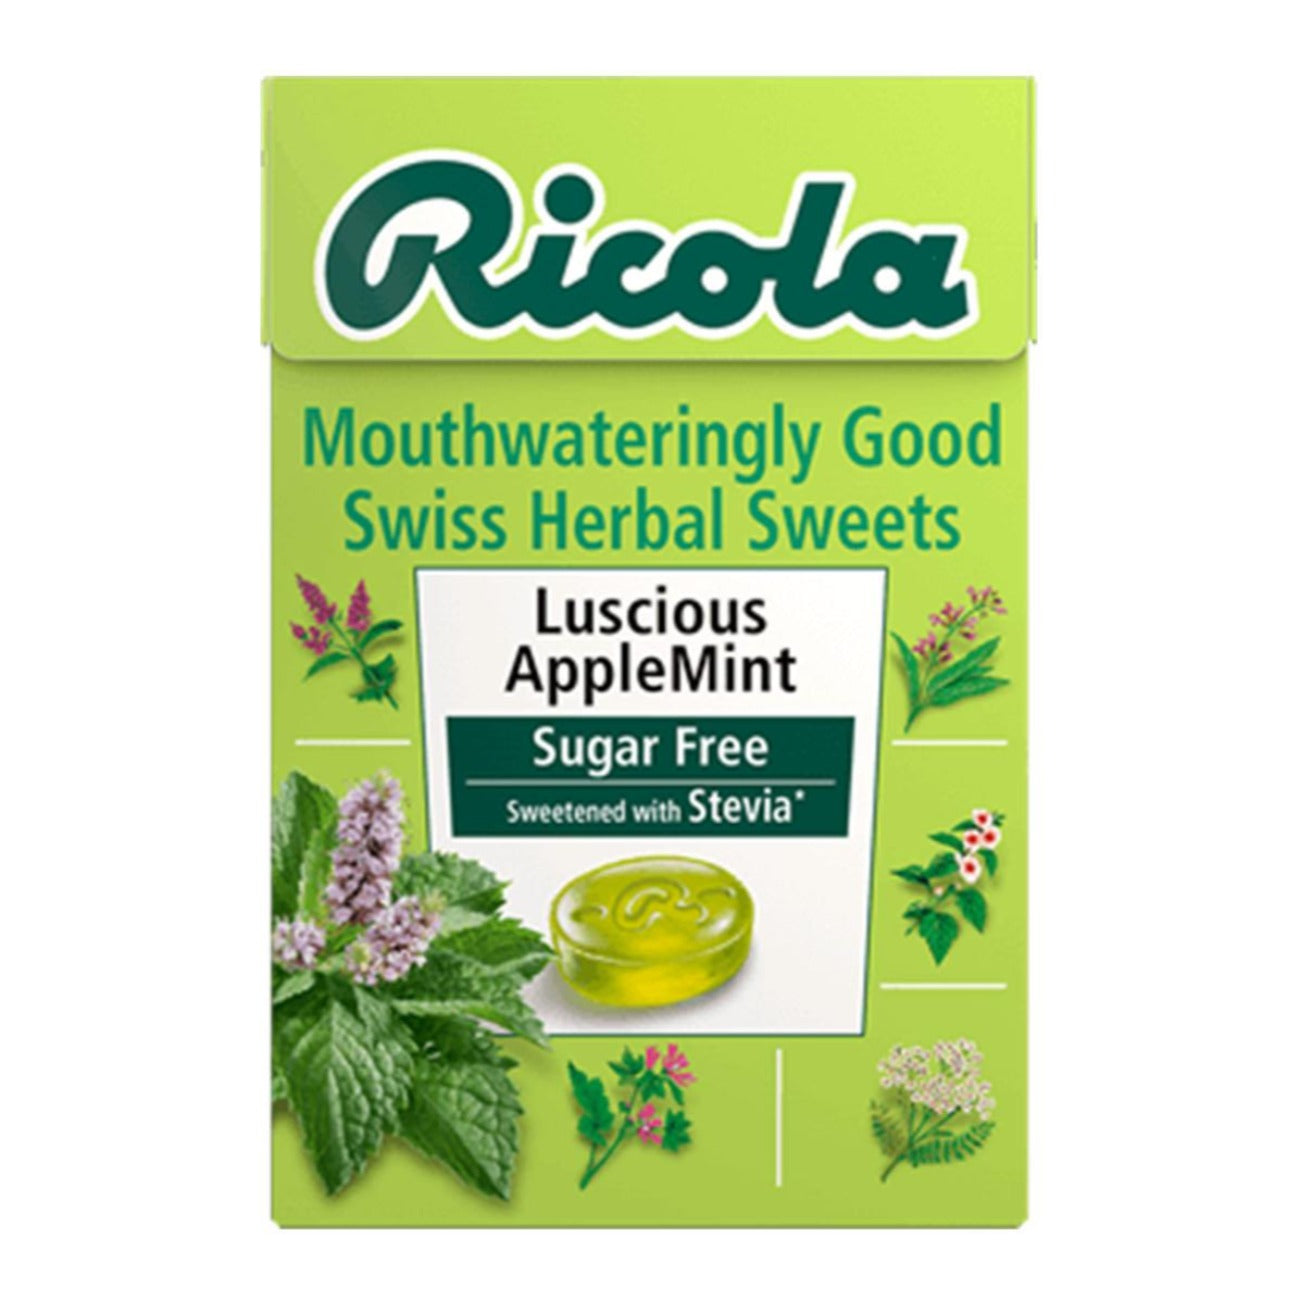 Luscious Apple Mint Sugar Free Swiss Herbal Sweets 45g